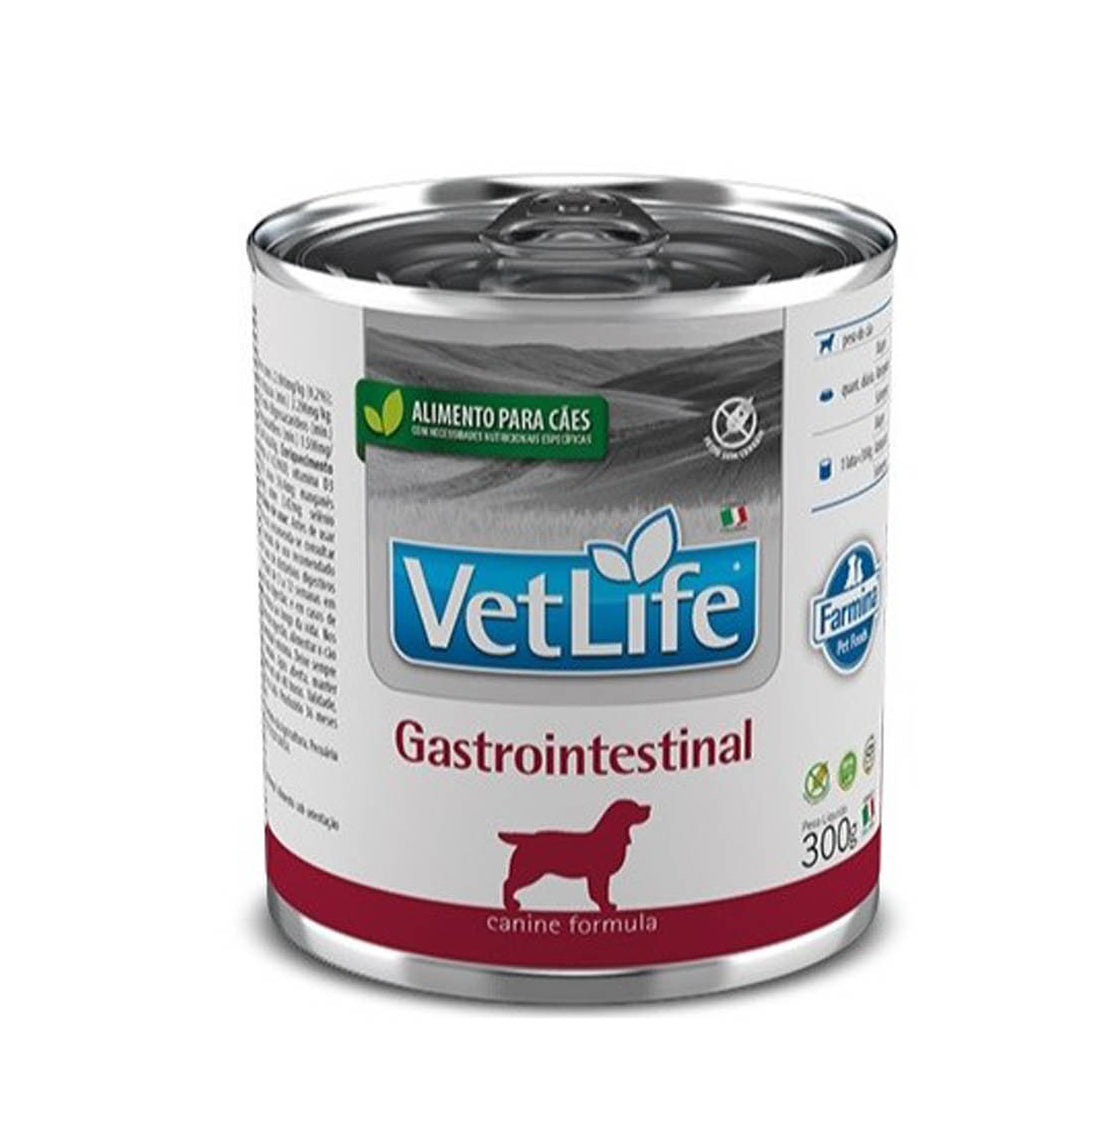 Vet Life Gastrointestinal Lata para perros